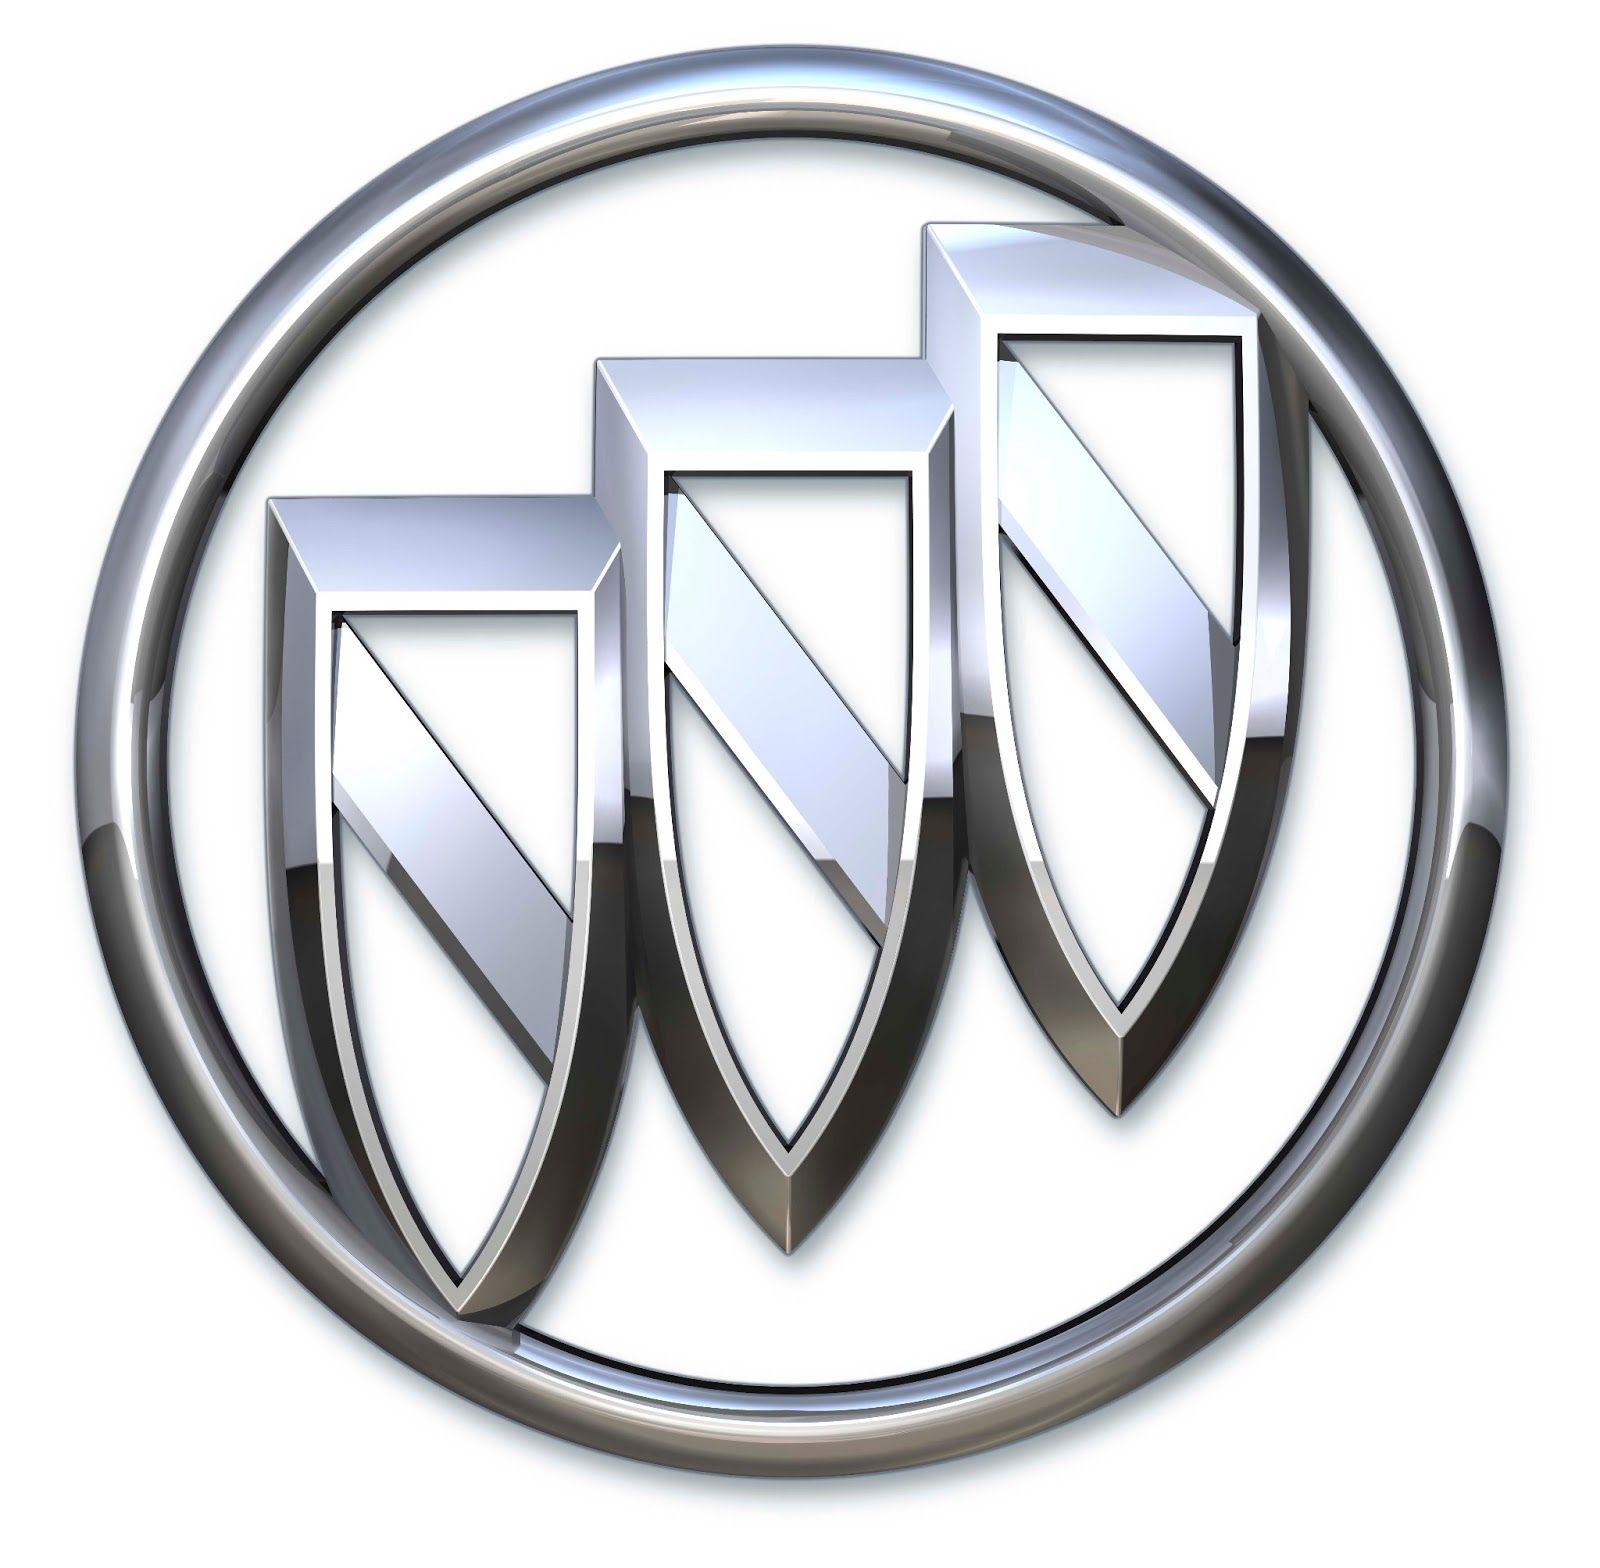 Car in Circle Logo - Buick Logo, Buick Car Symbol Meaning and History | Car Brand Names.com